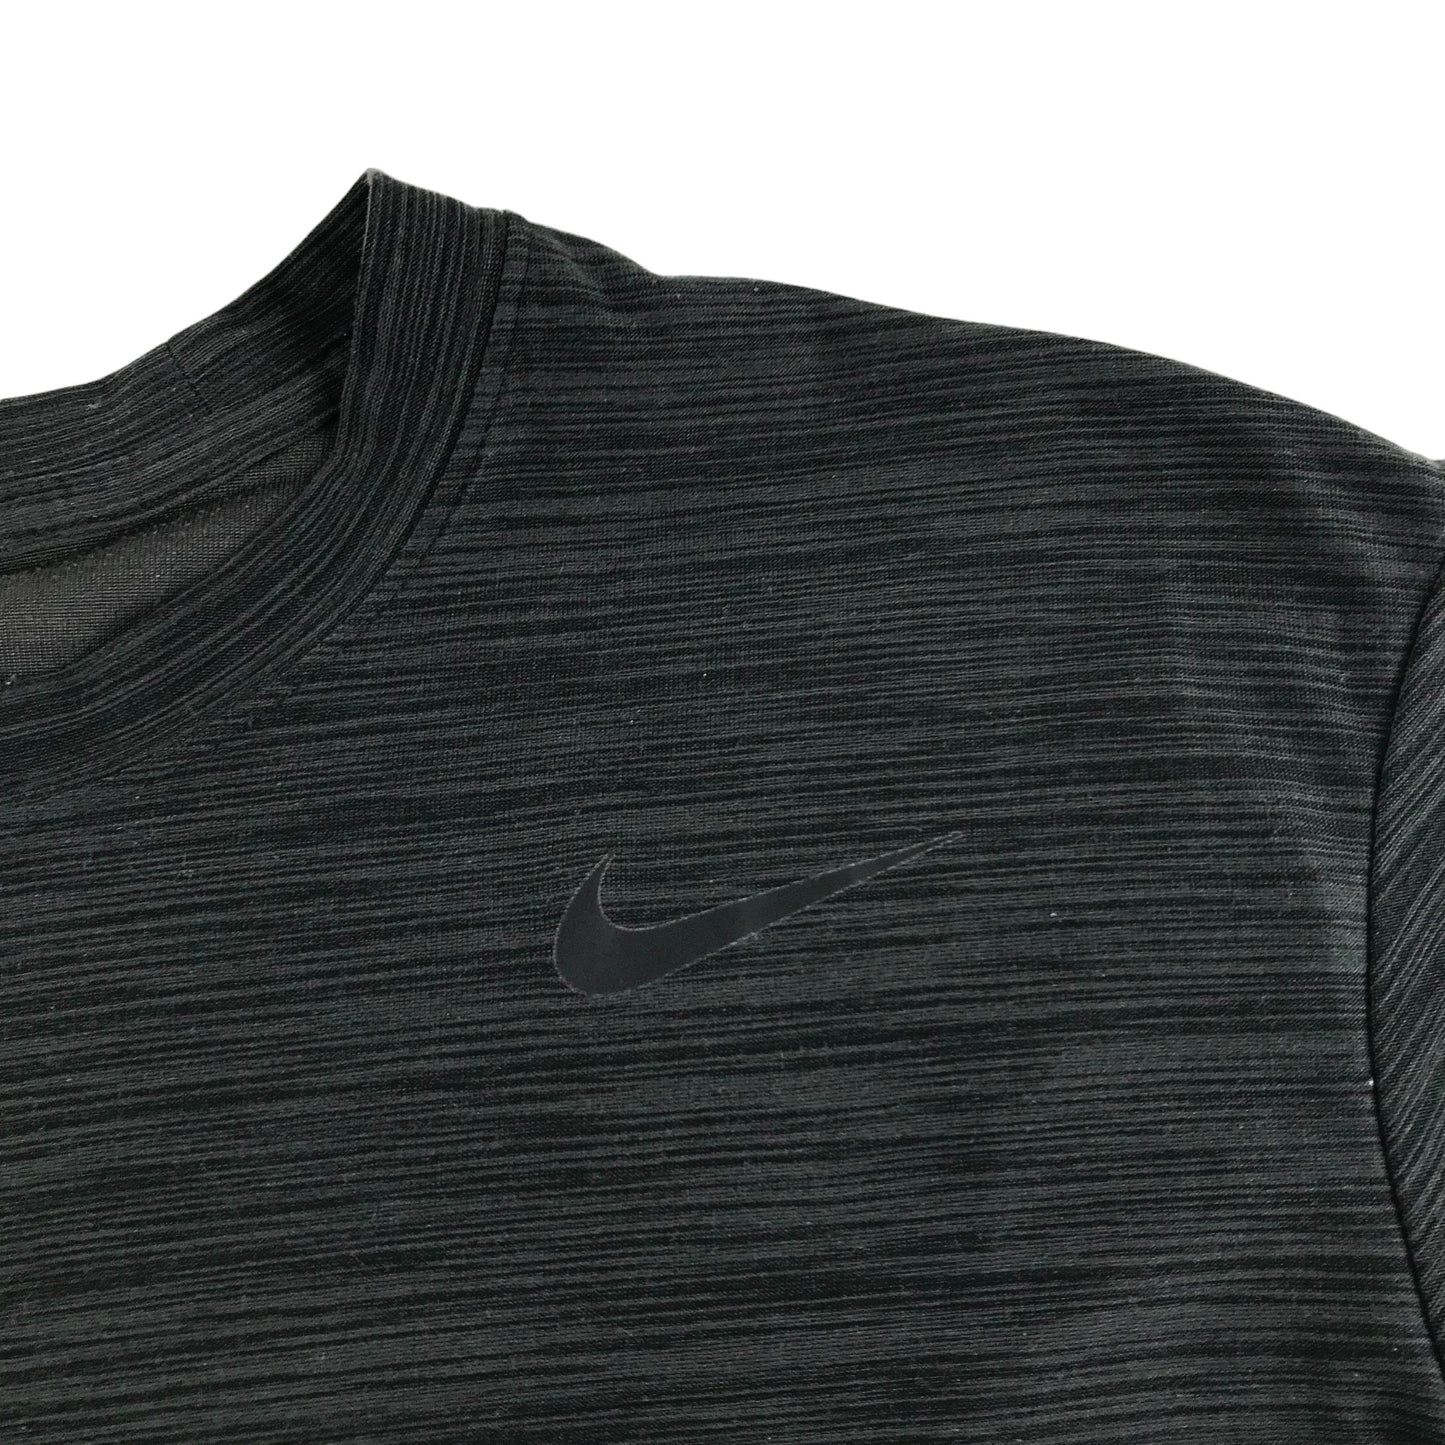 Nike Sport Top Size Medium Grey Short Sleeve Dri-Fit